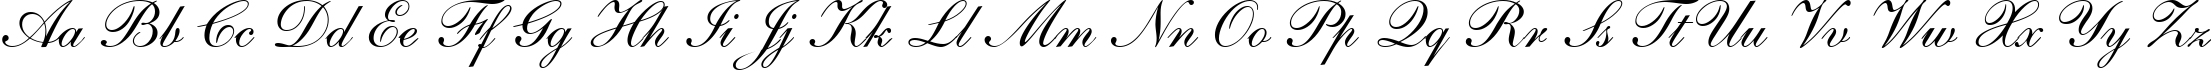 Пример написания английского алфавита шрифтом English 111 Adagio BT